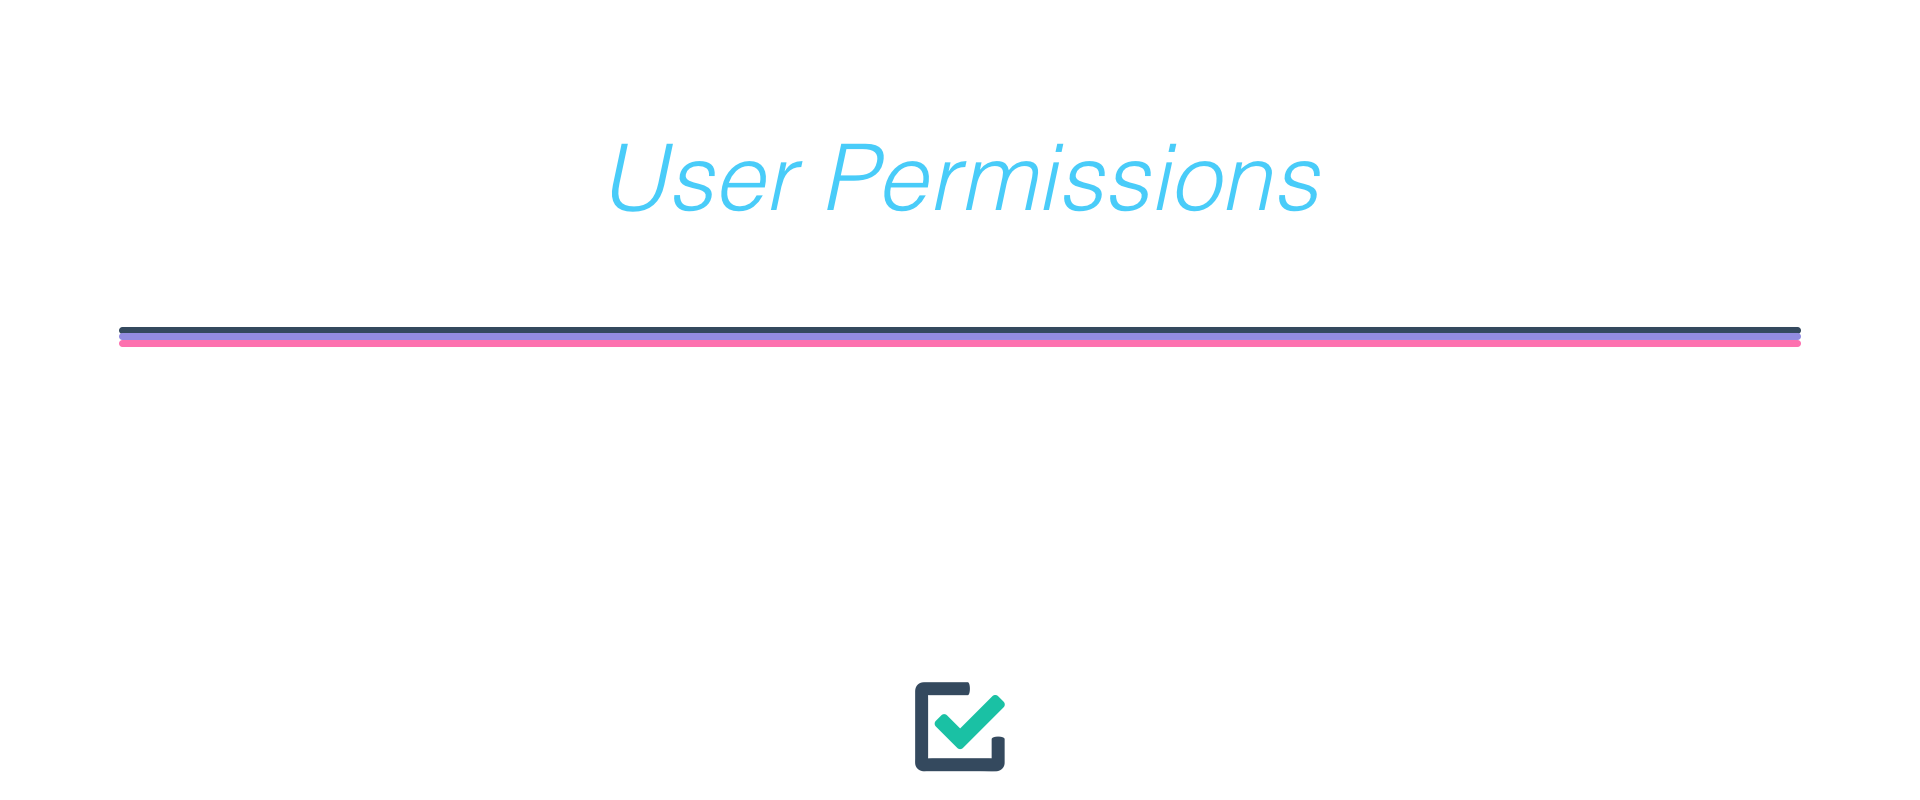 User permissions